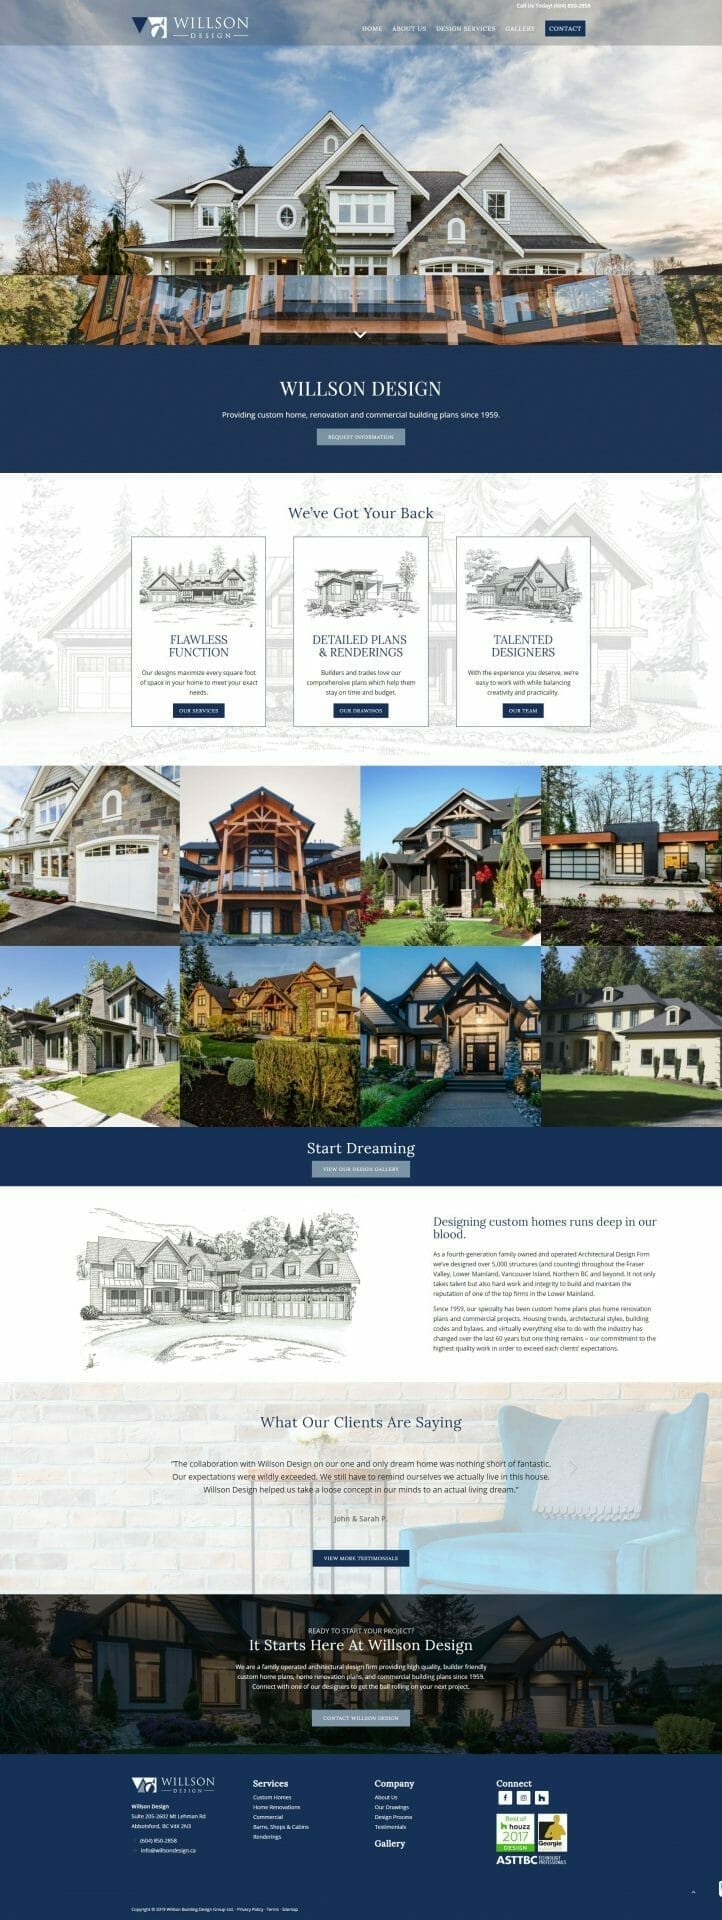 Willson Design website home page layout